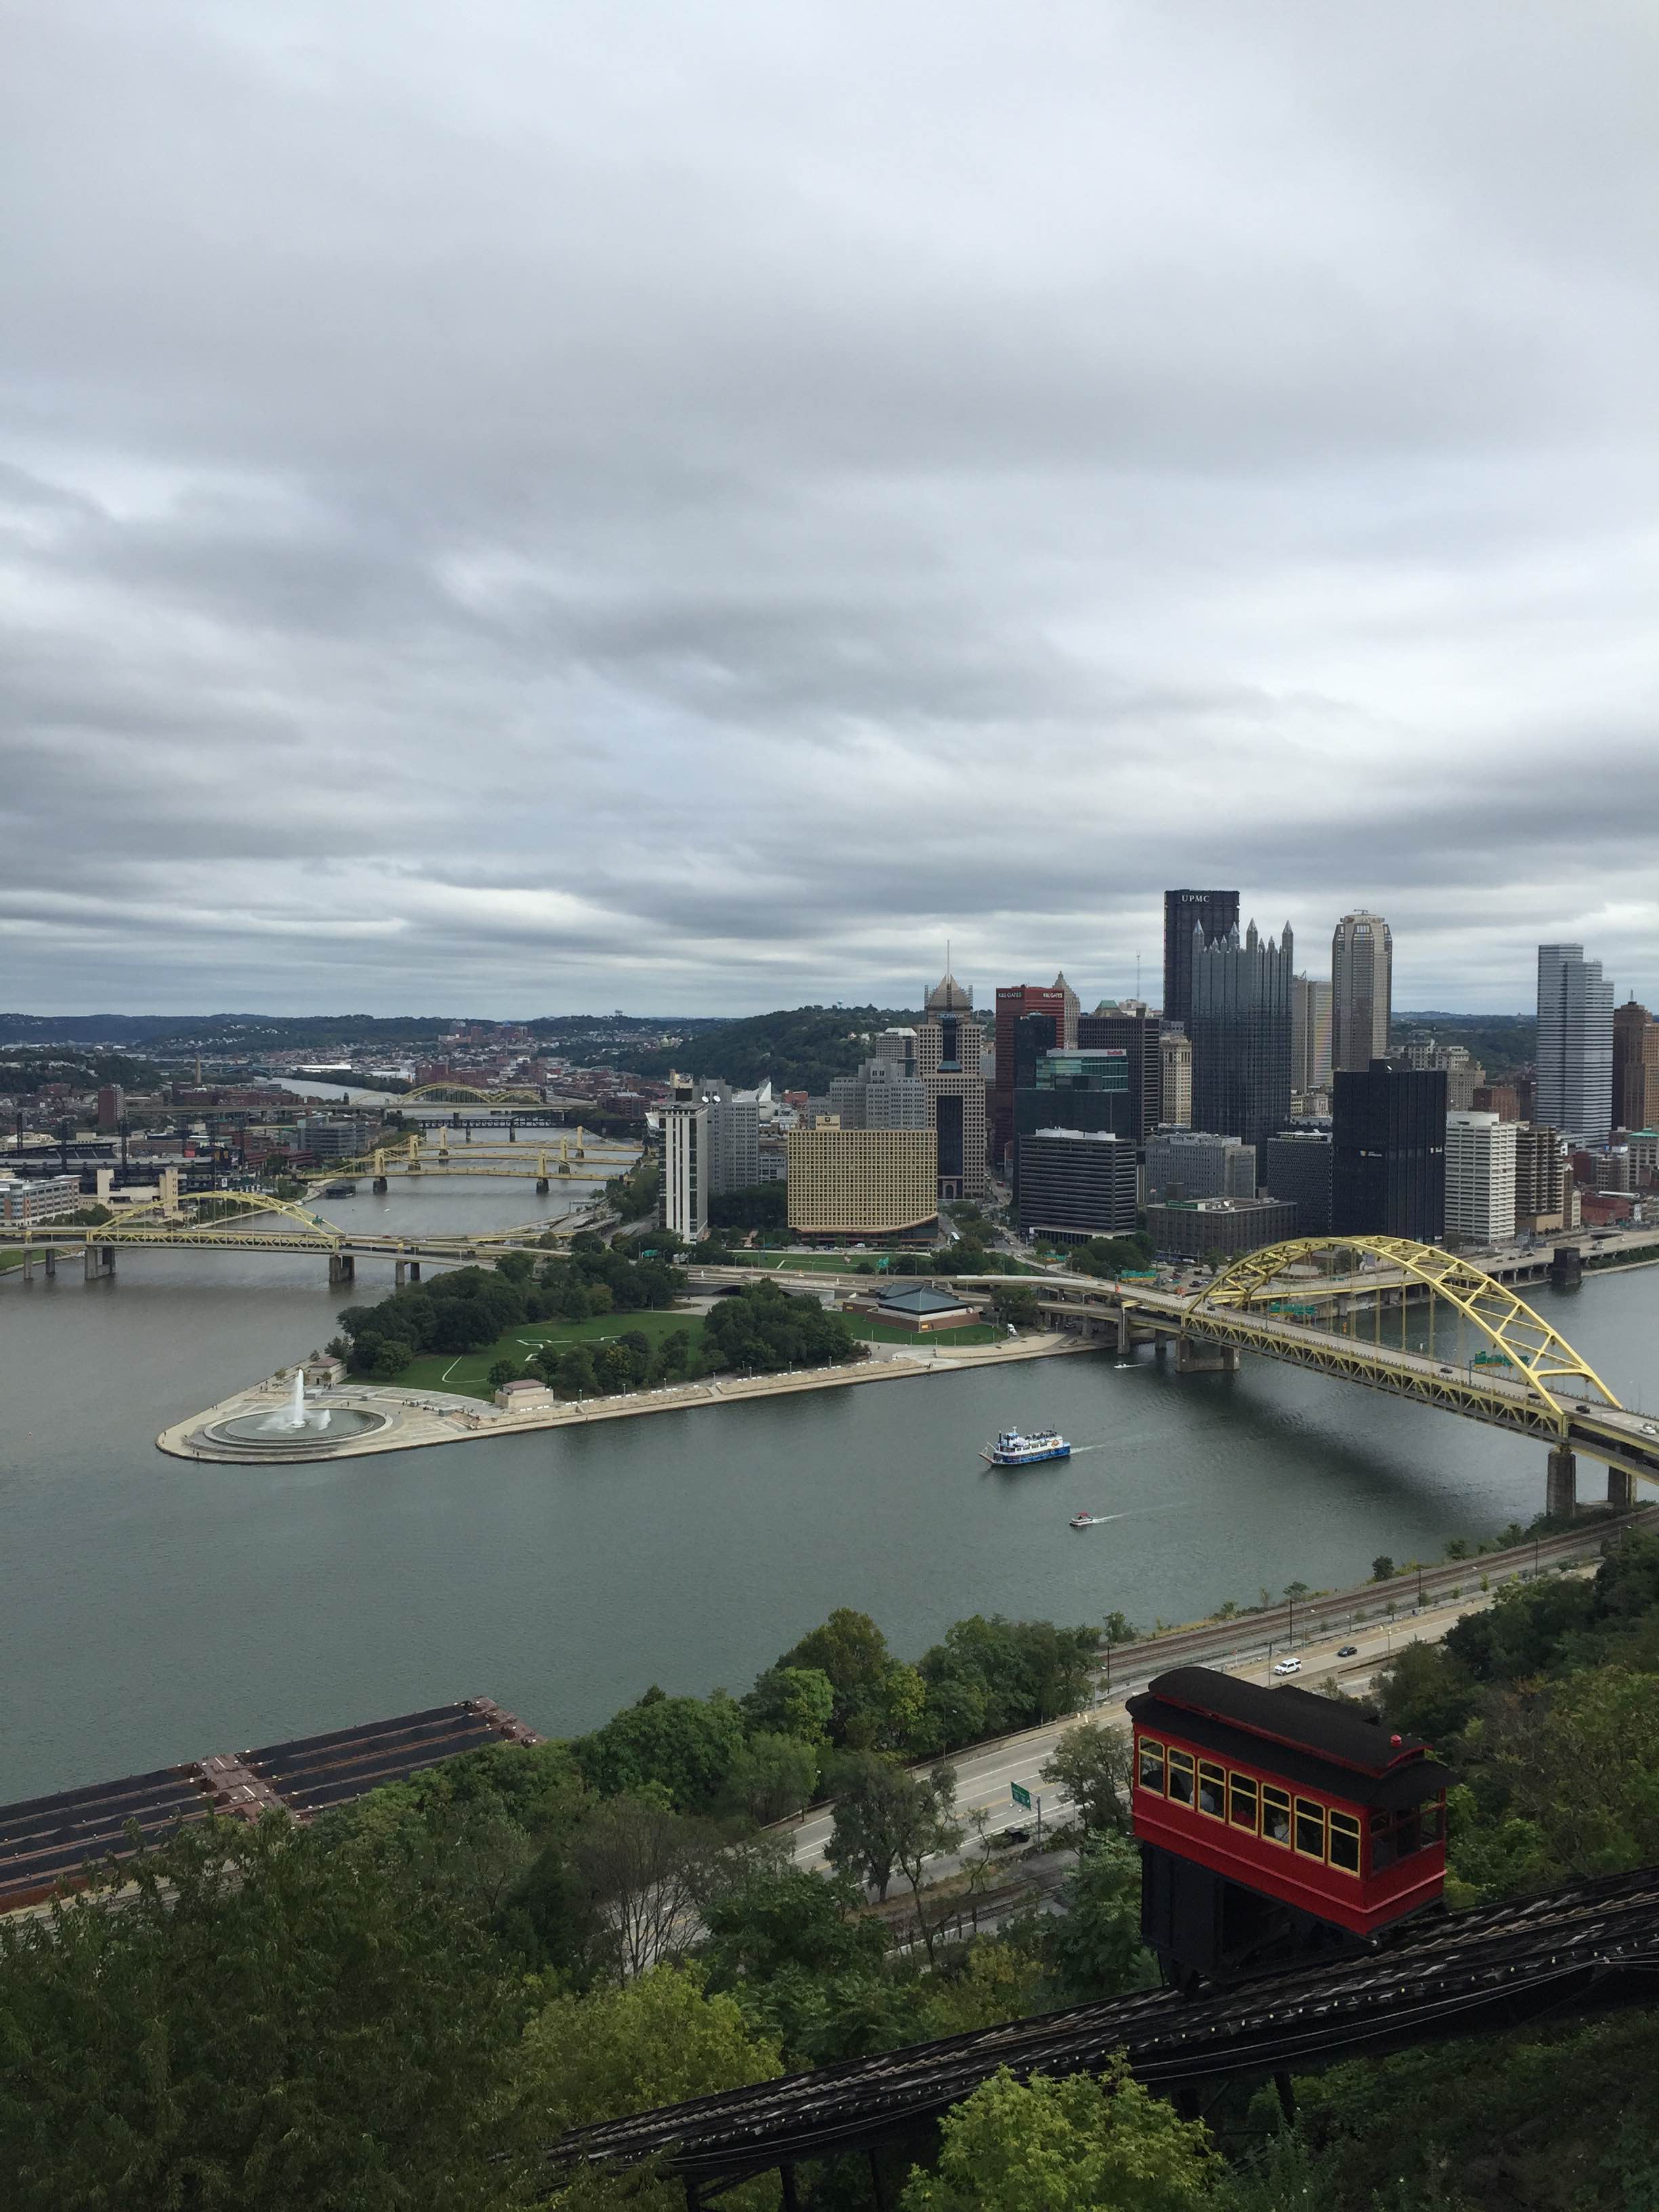 Pittsburgh. I know. Beautiful.